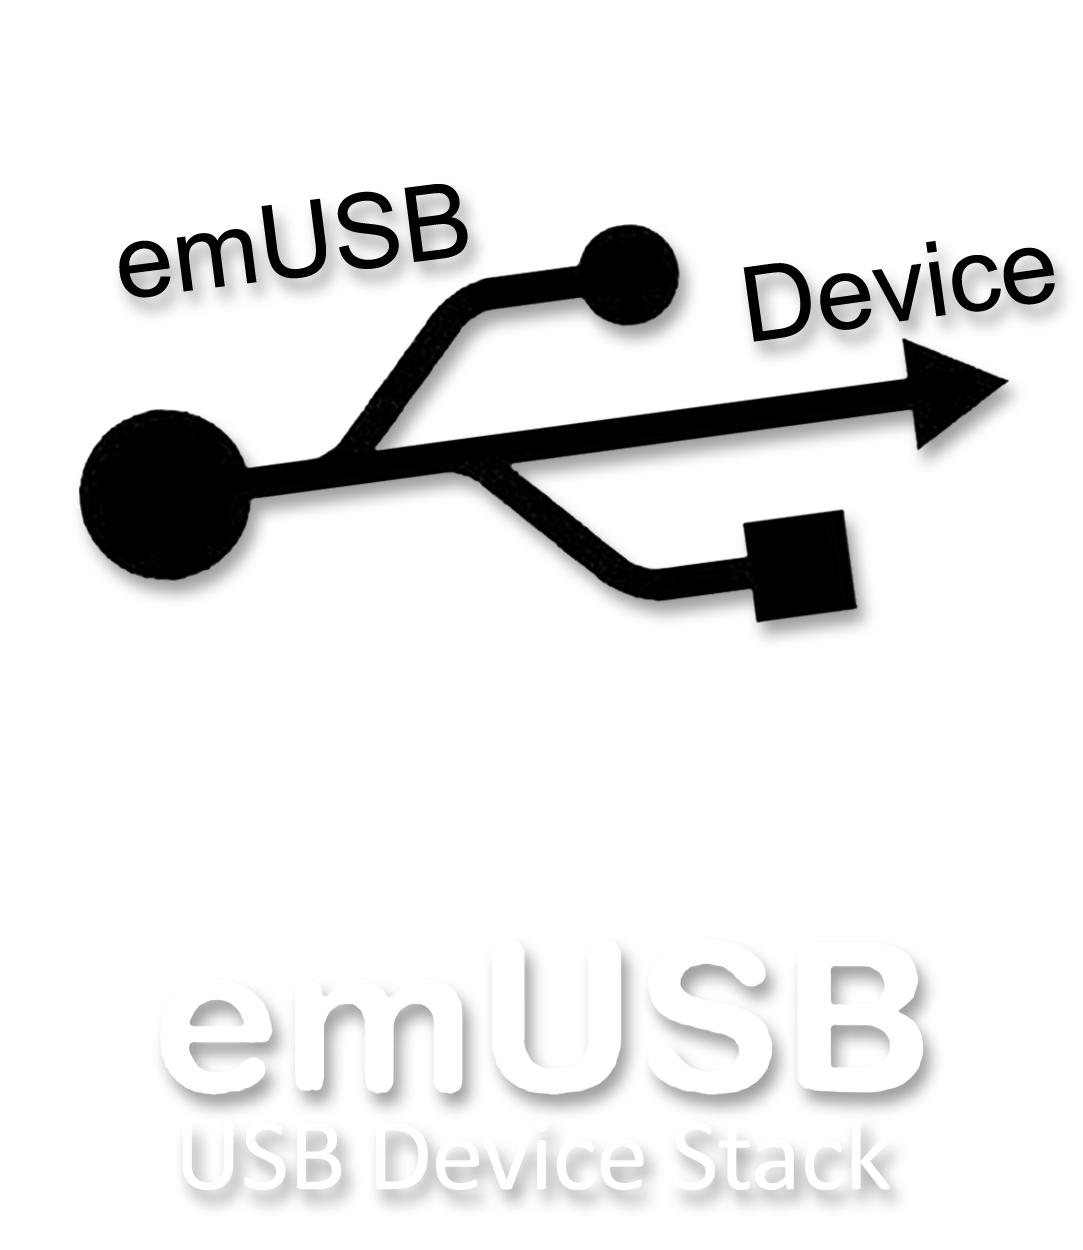 9.50.04 EMUSB DEVPRO BUNDL SSL USB DEVICE STACK, SOURCE CODE LIC, 1USER SEGGER